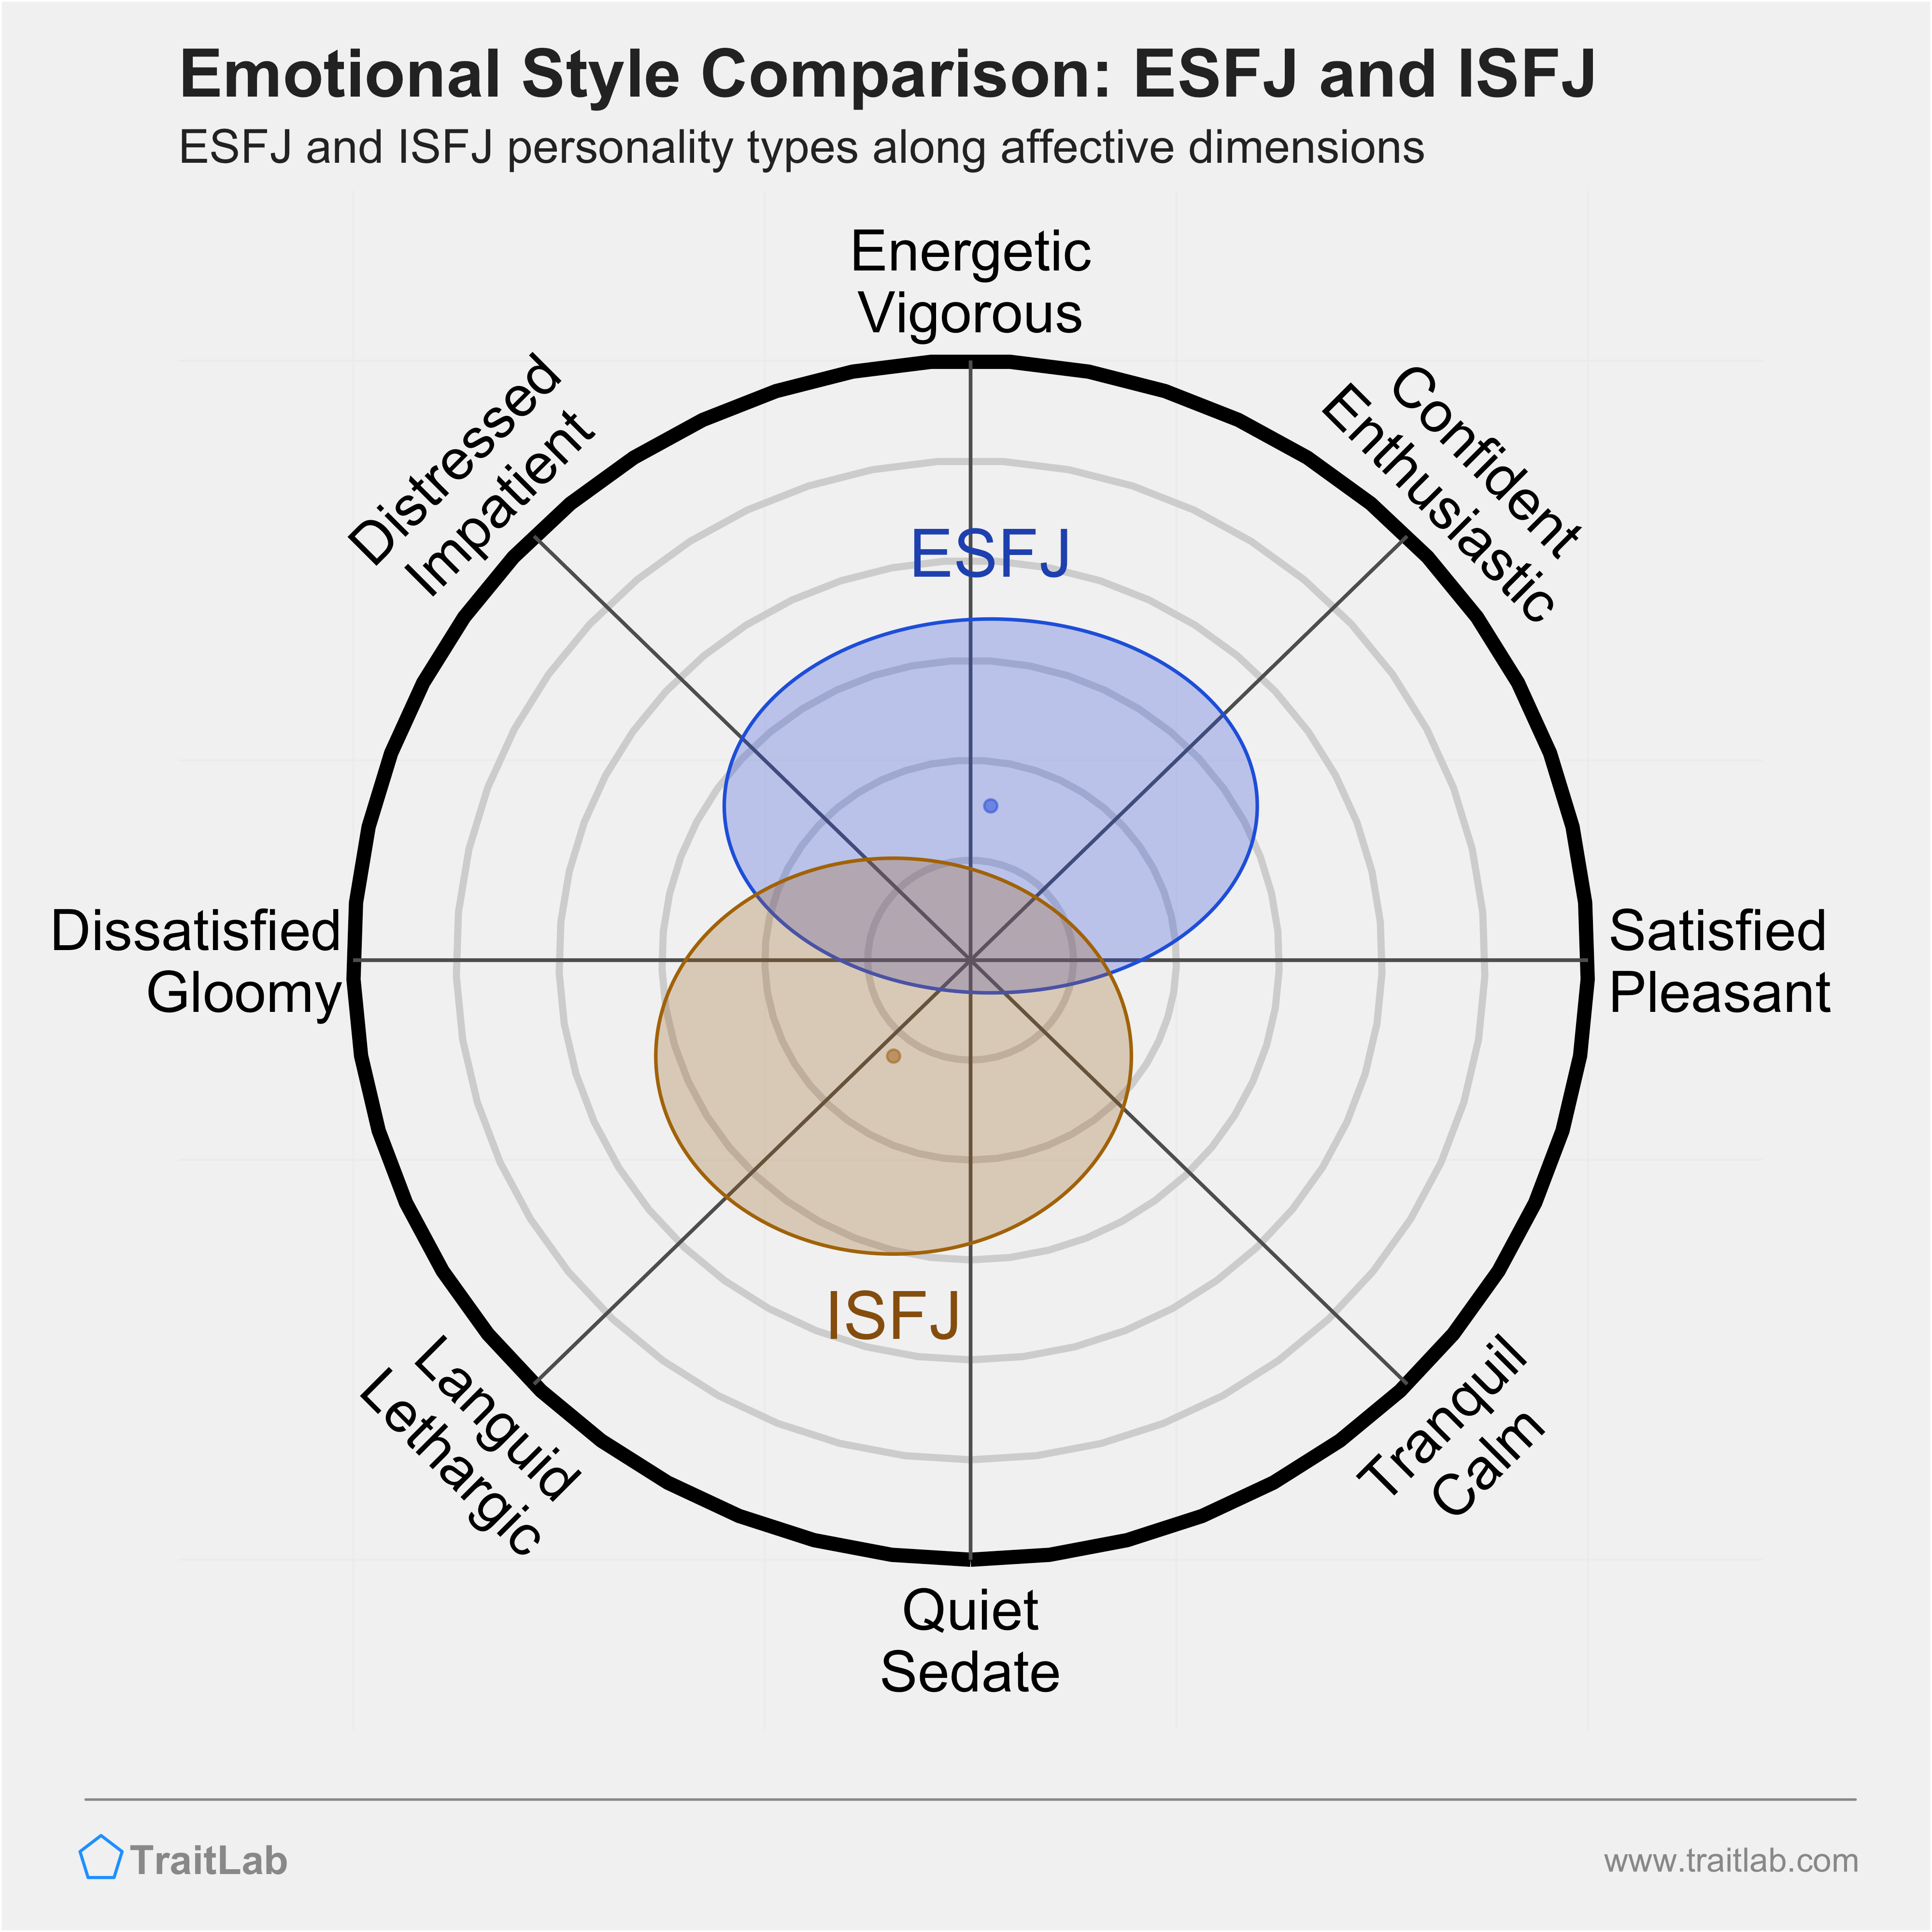 ESFJ and ISFJ comparison across emotional (affective) dimensions